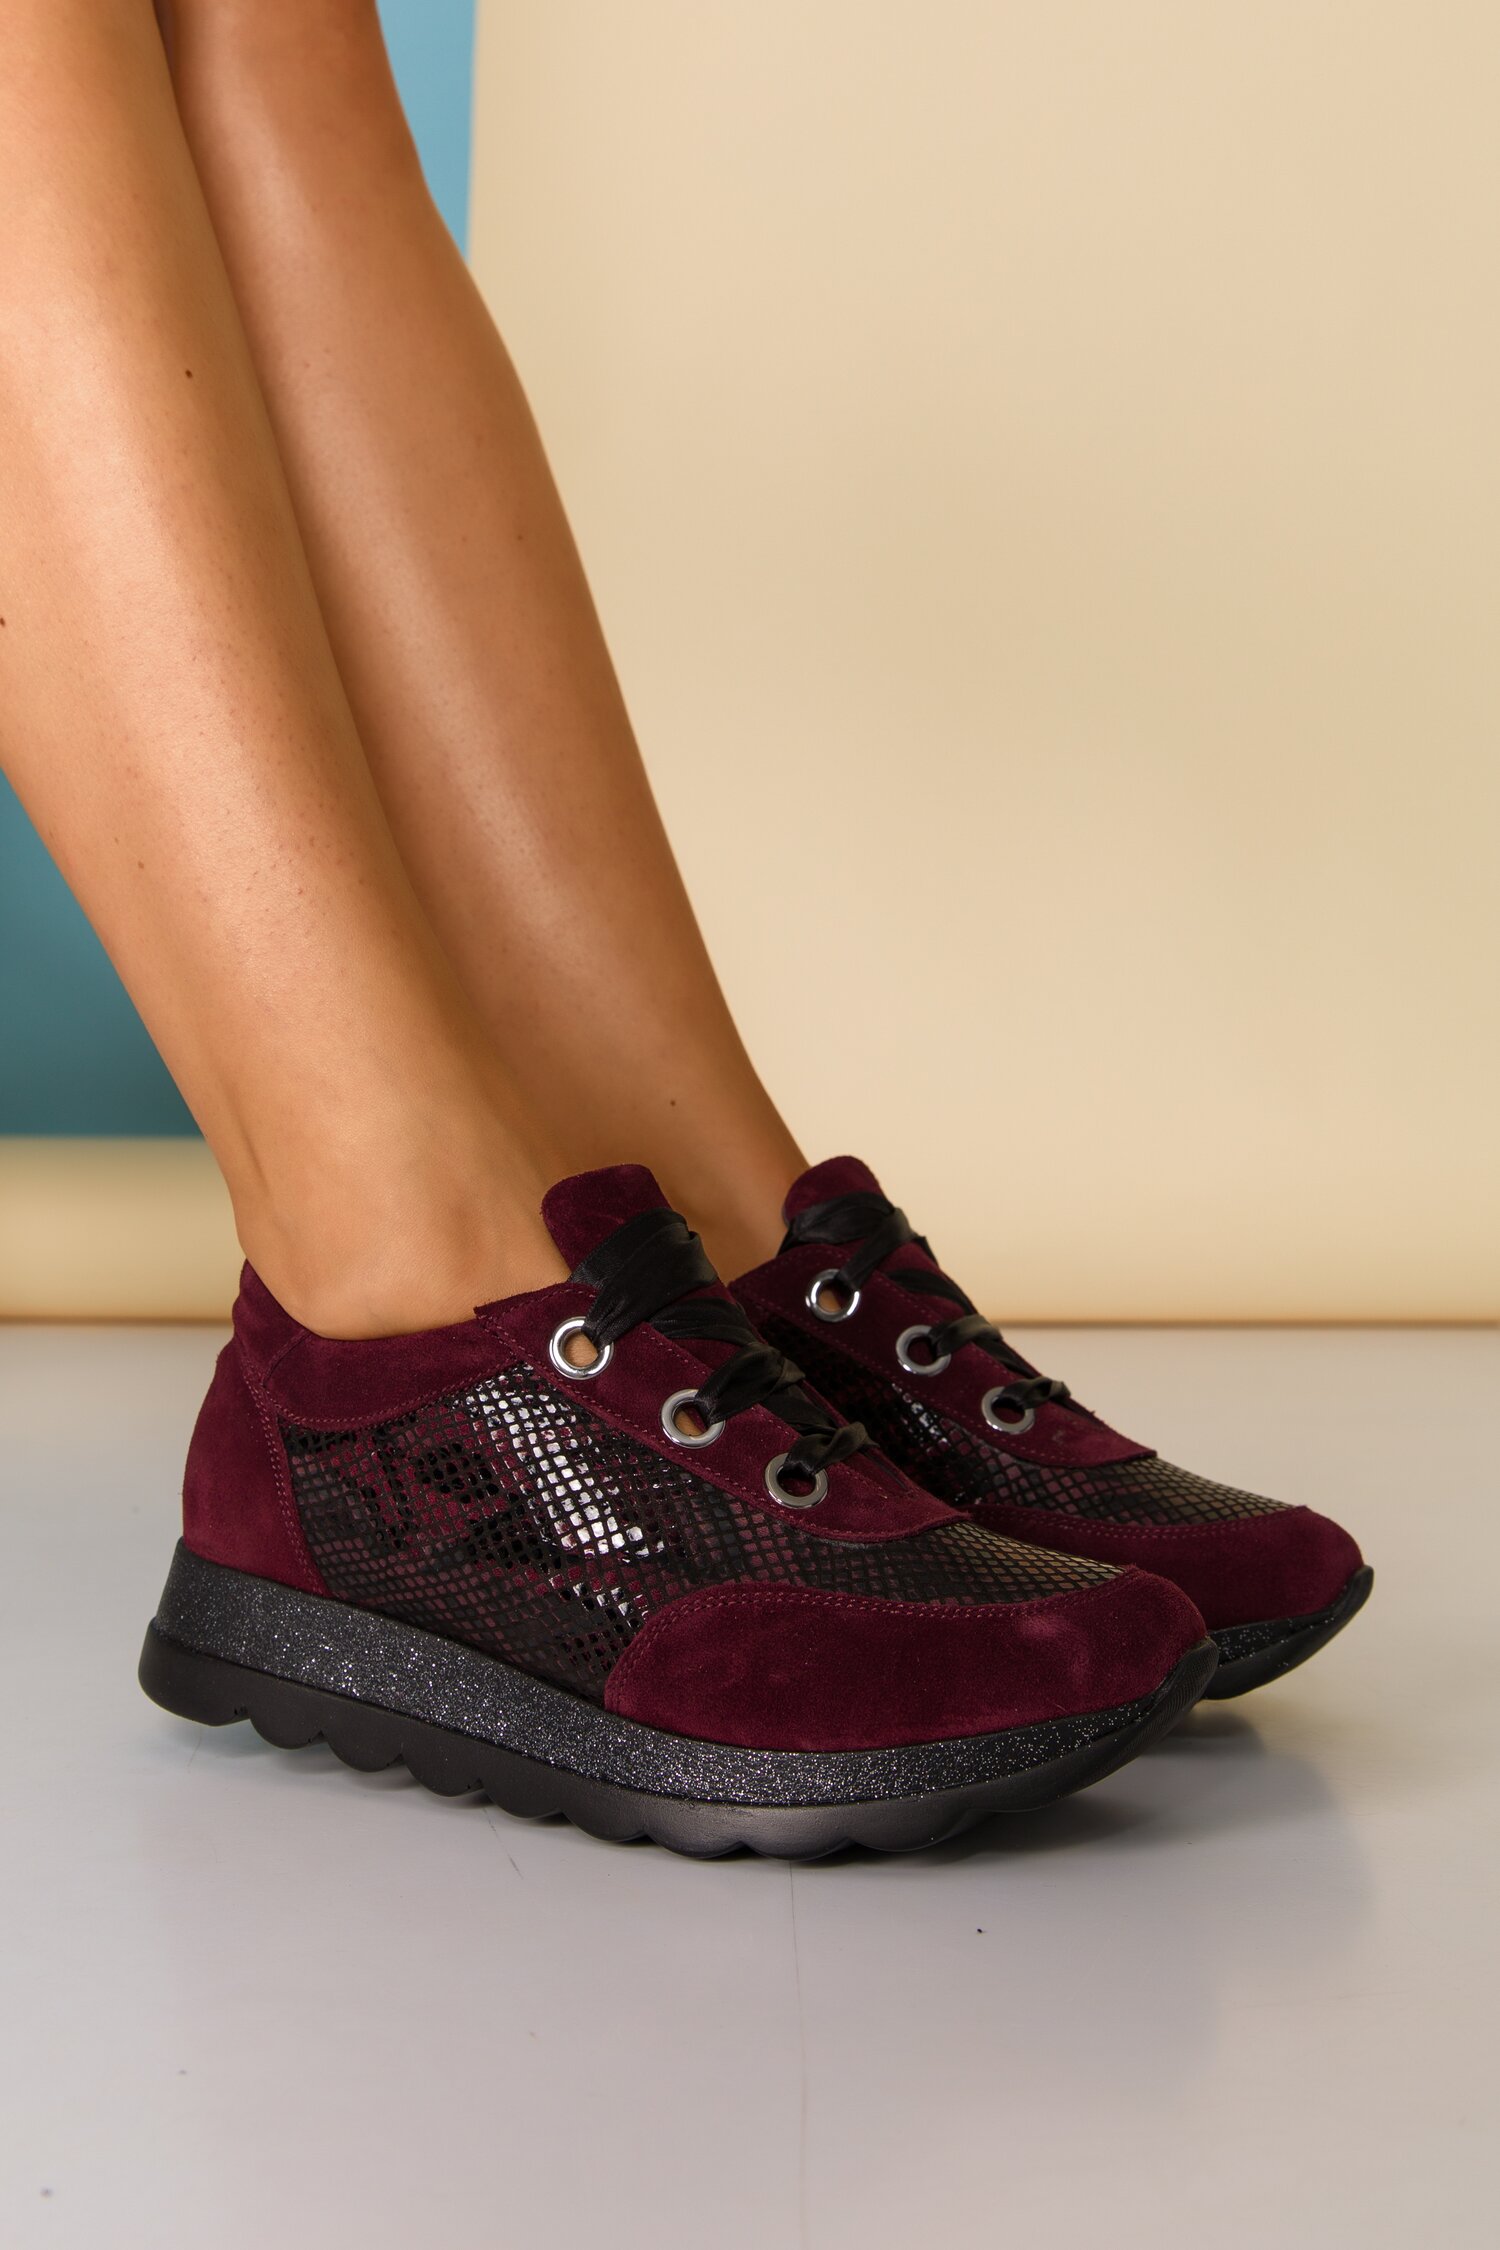 Pantofi sport Kelly bordo cu imprimeu snake dyfashion.ro imagine megaplaza.ro